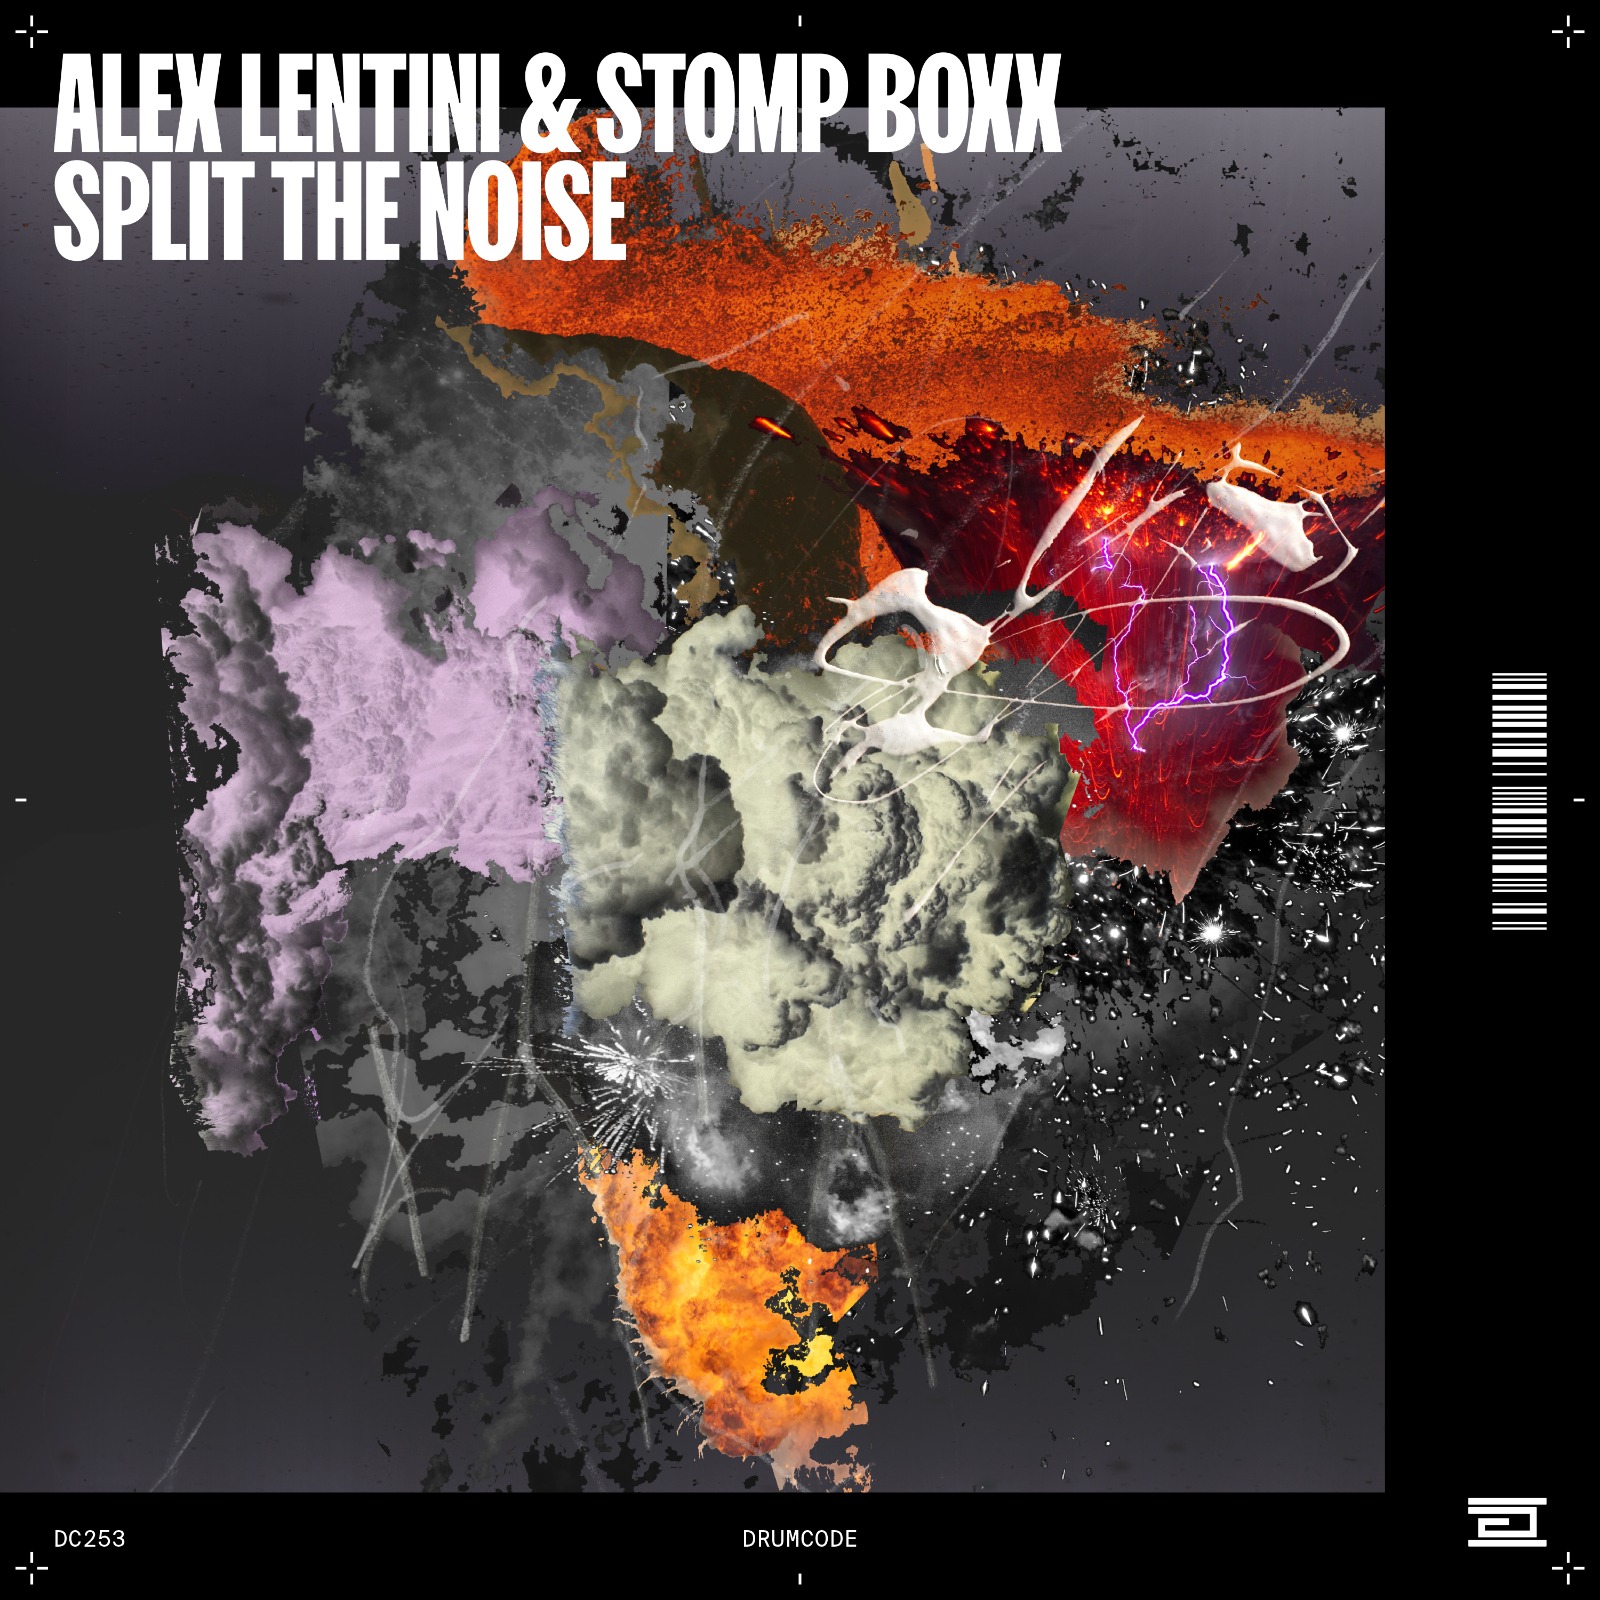 Riveting Drumcode Drip From Italian Pair, Alex Lentini & Stomp Boxx: ‘Split the Noise’